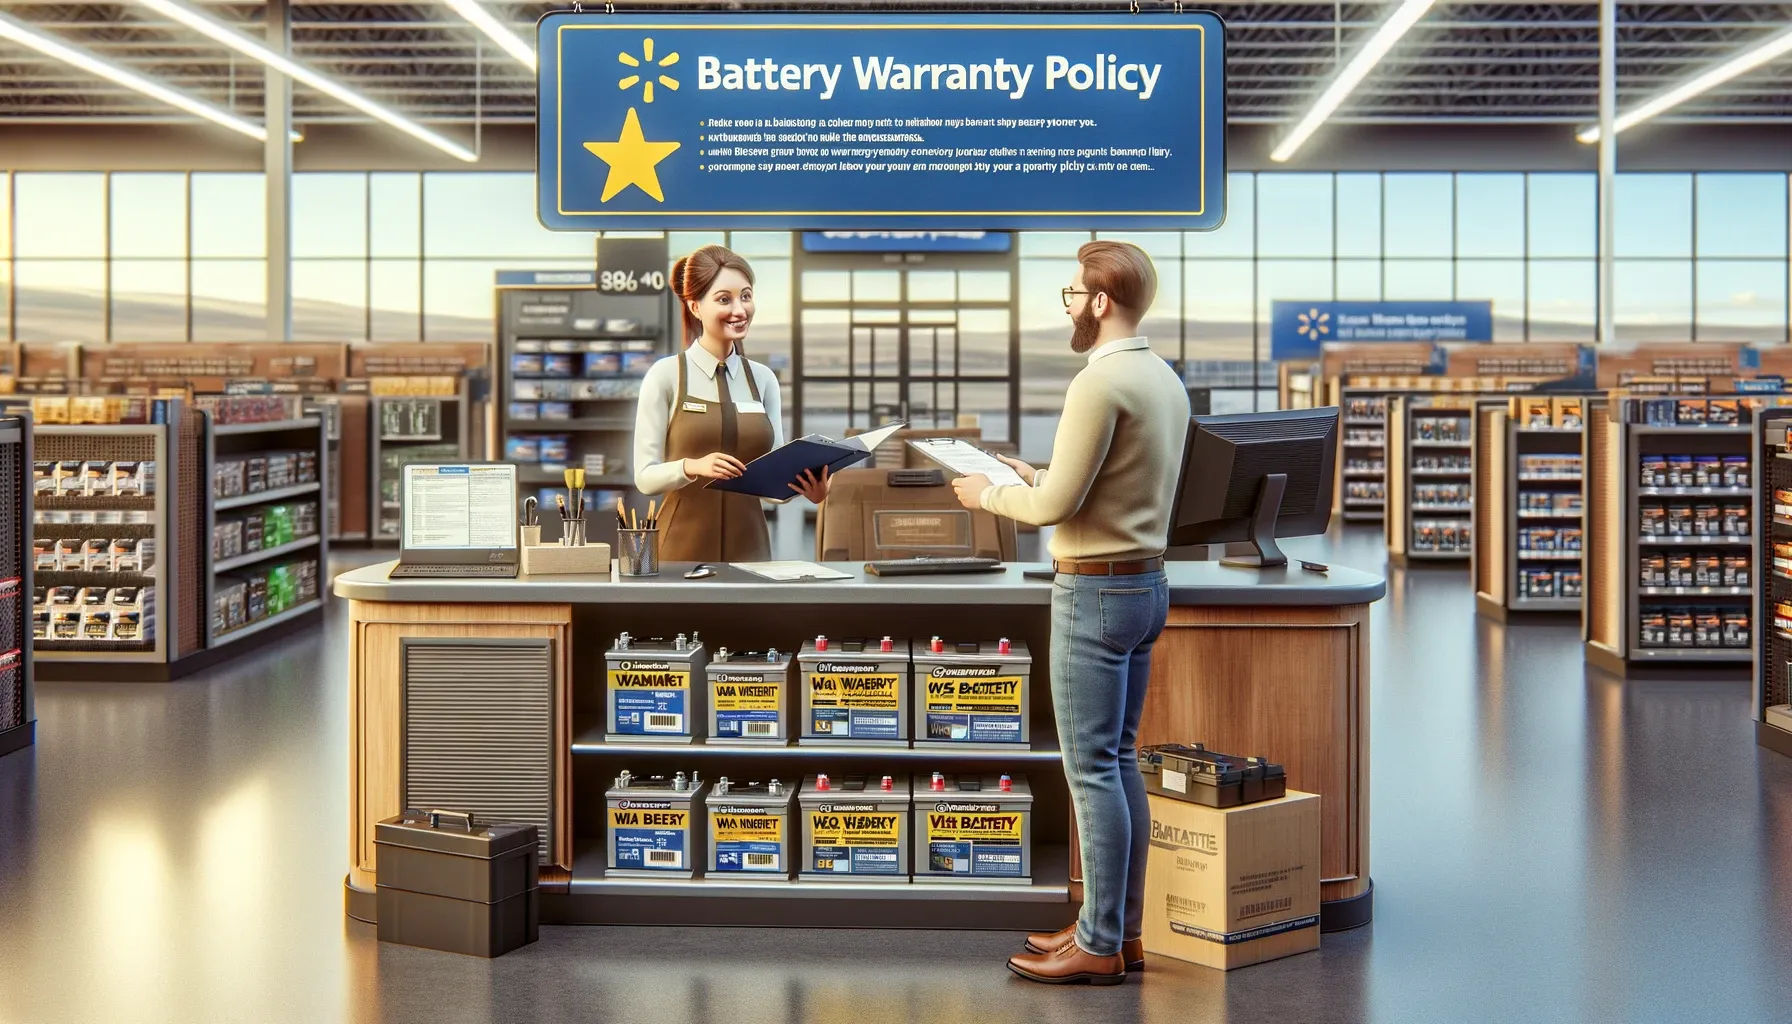 Walmart's Battery Warranty Policy